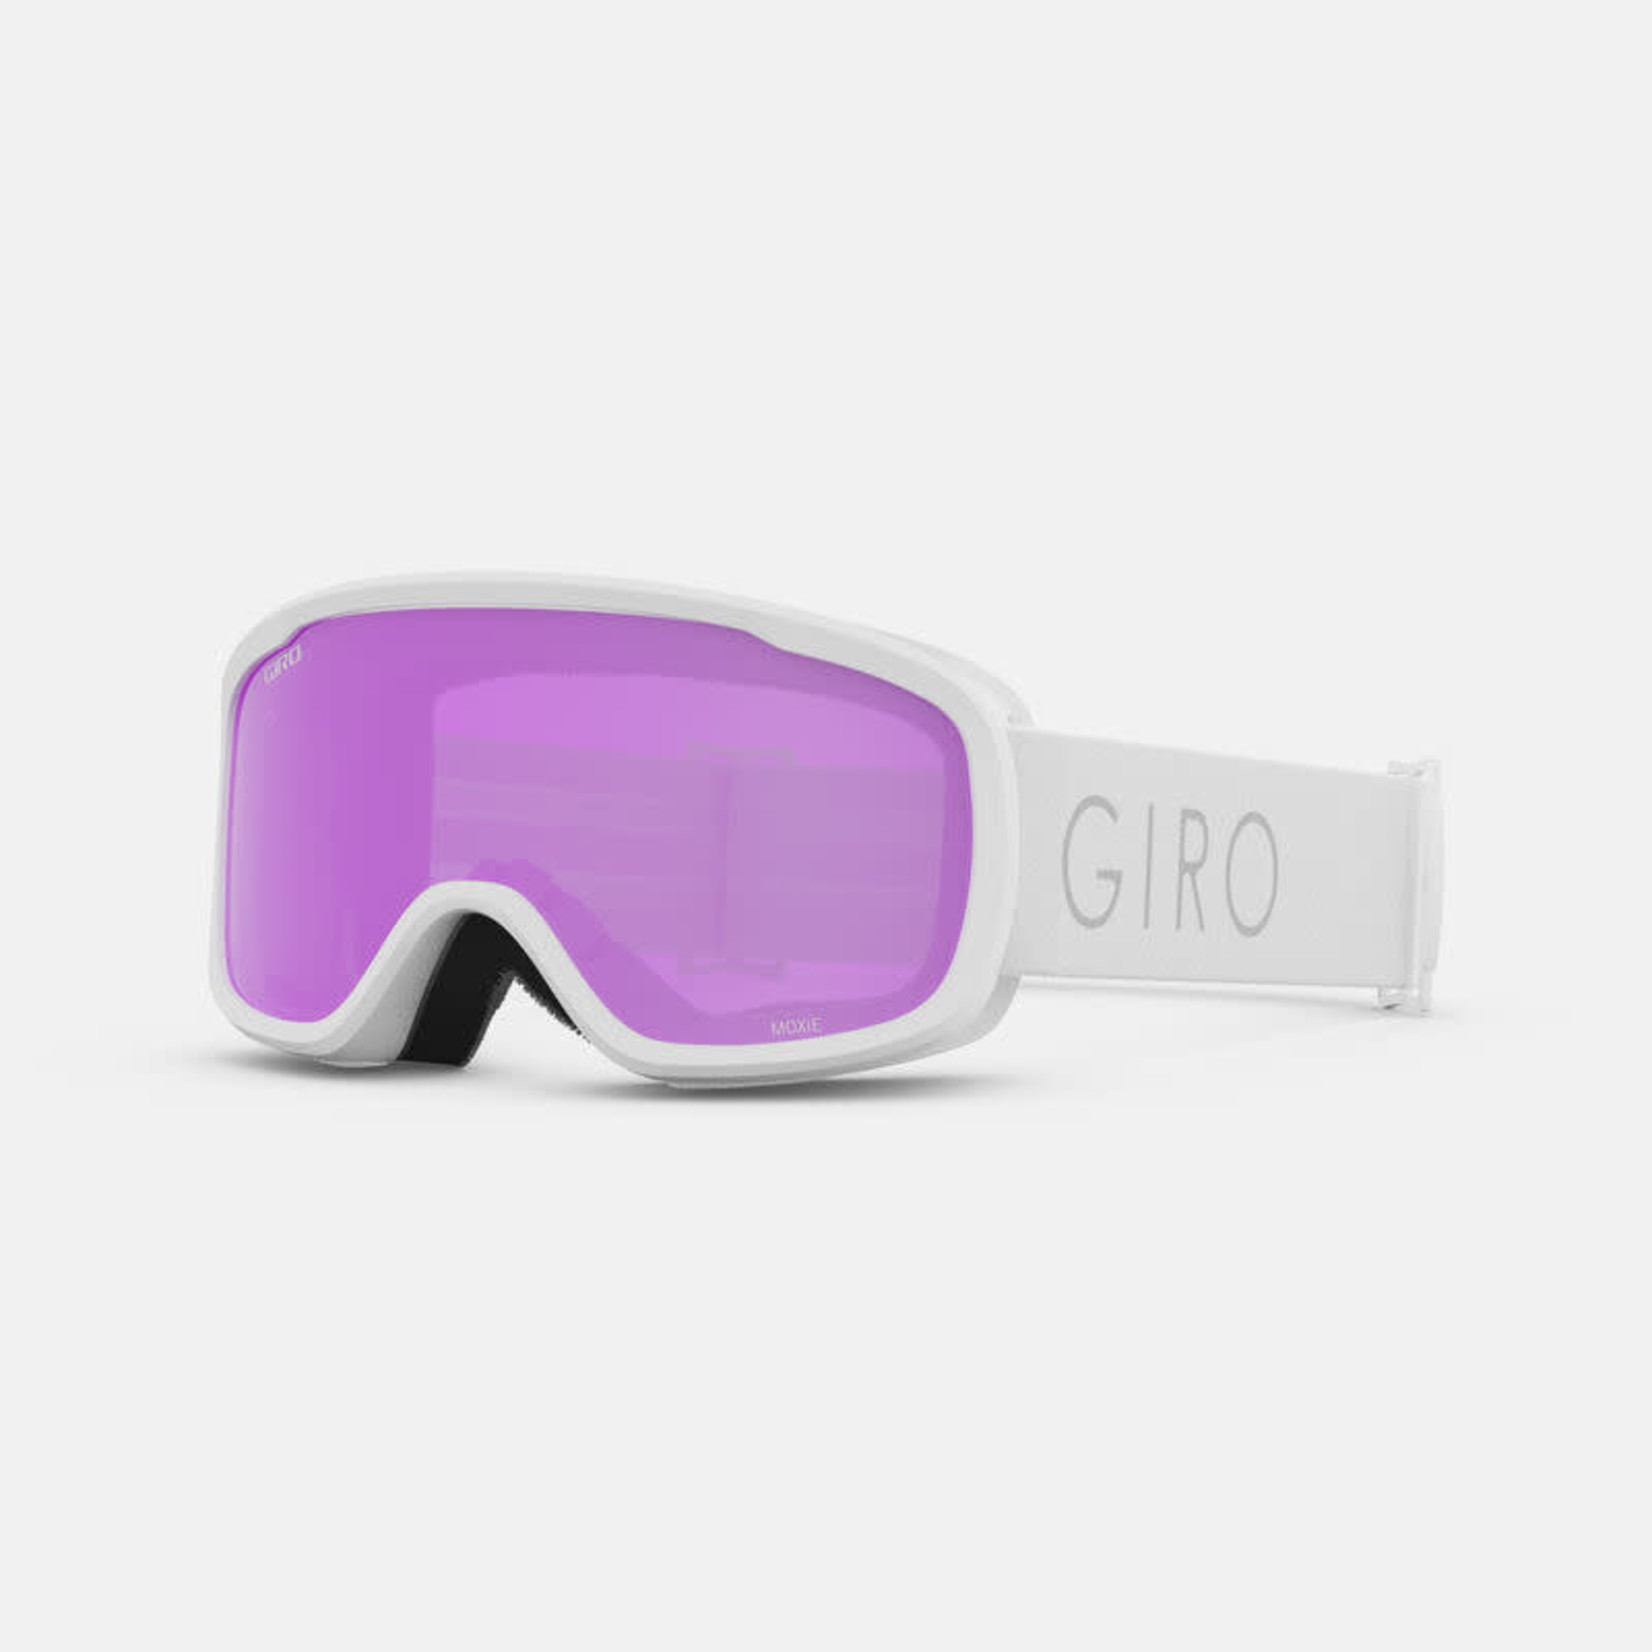 GIRO Moxie lunette de ski pour femme - Vertige Vélo Ski